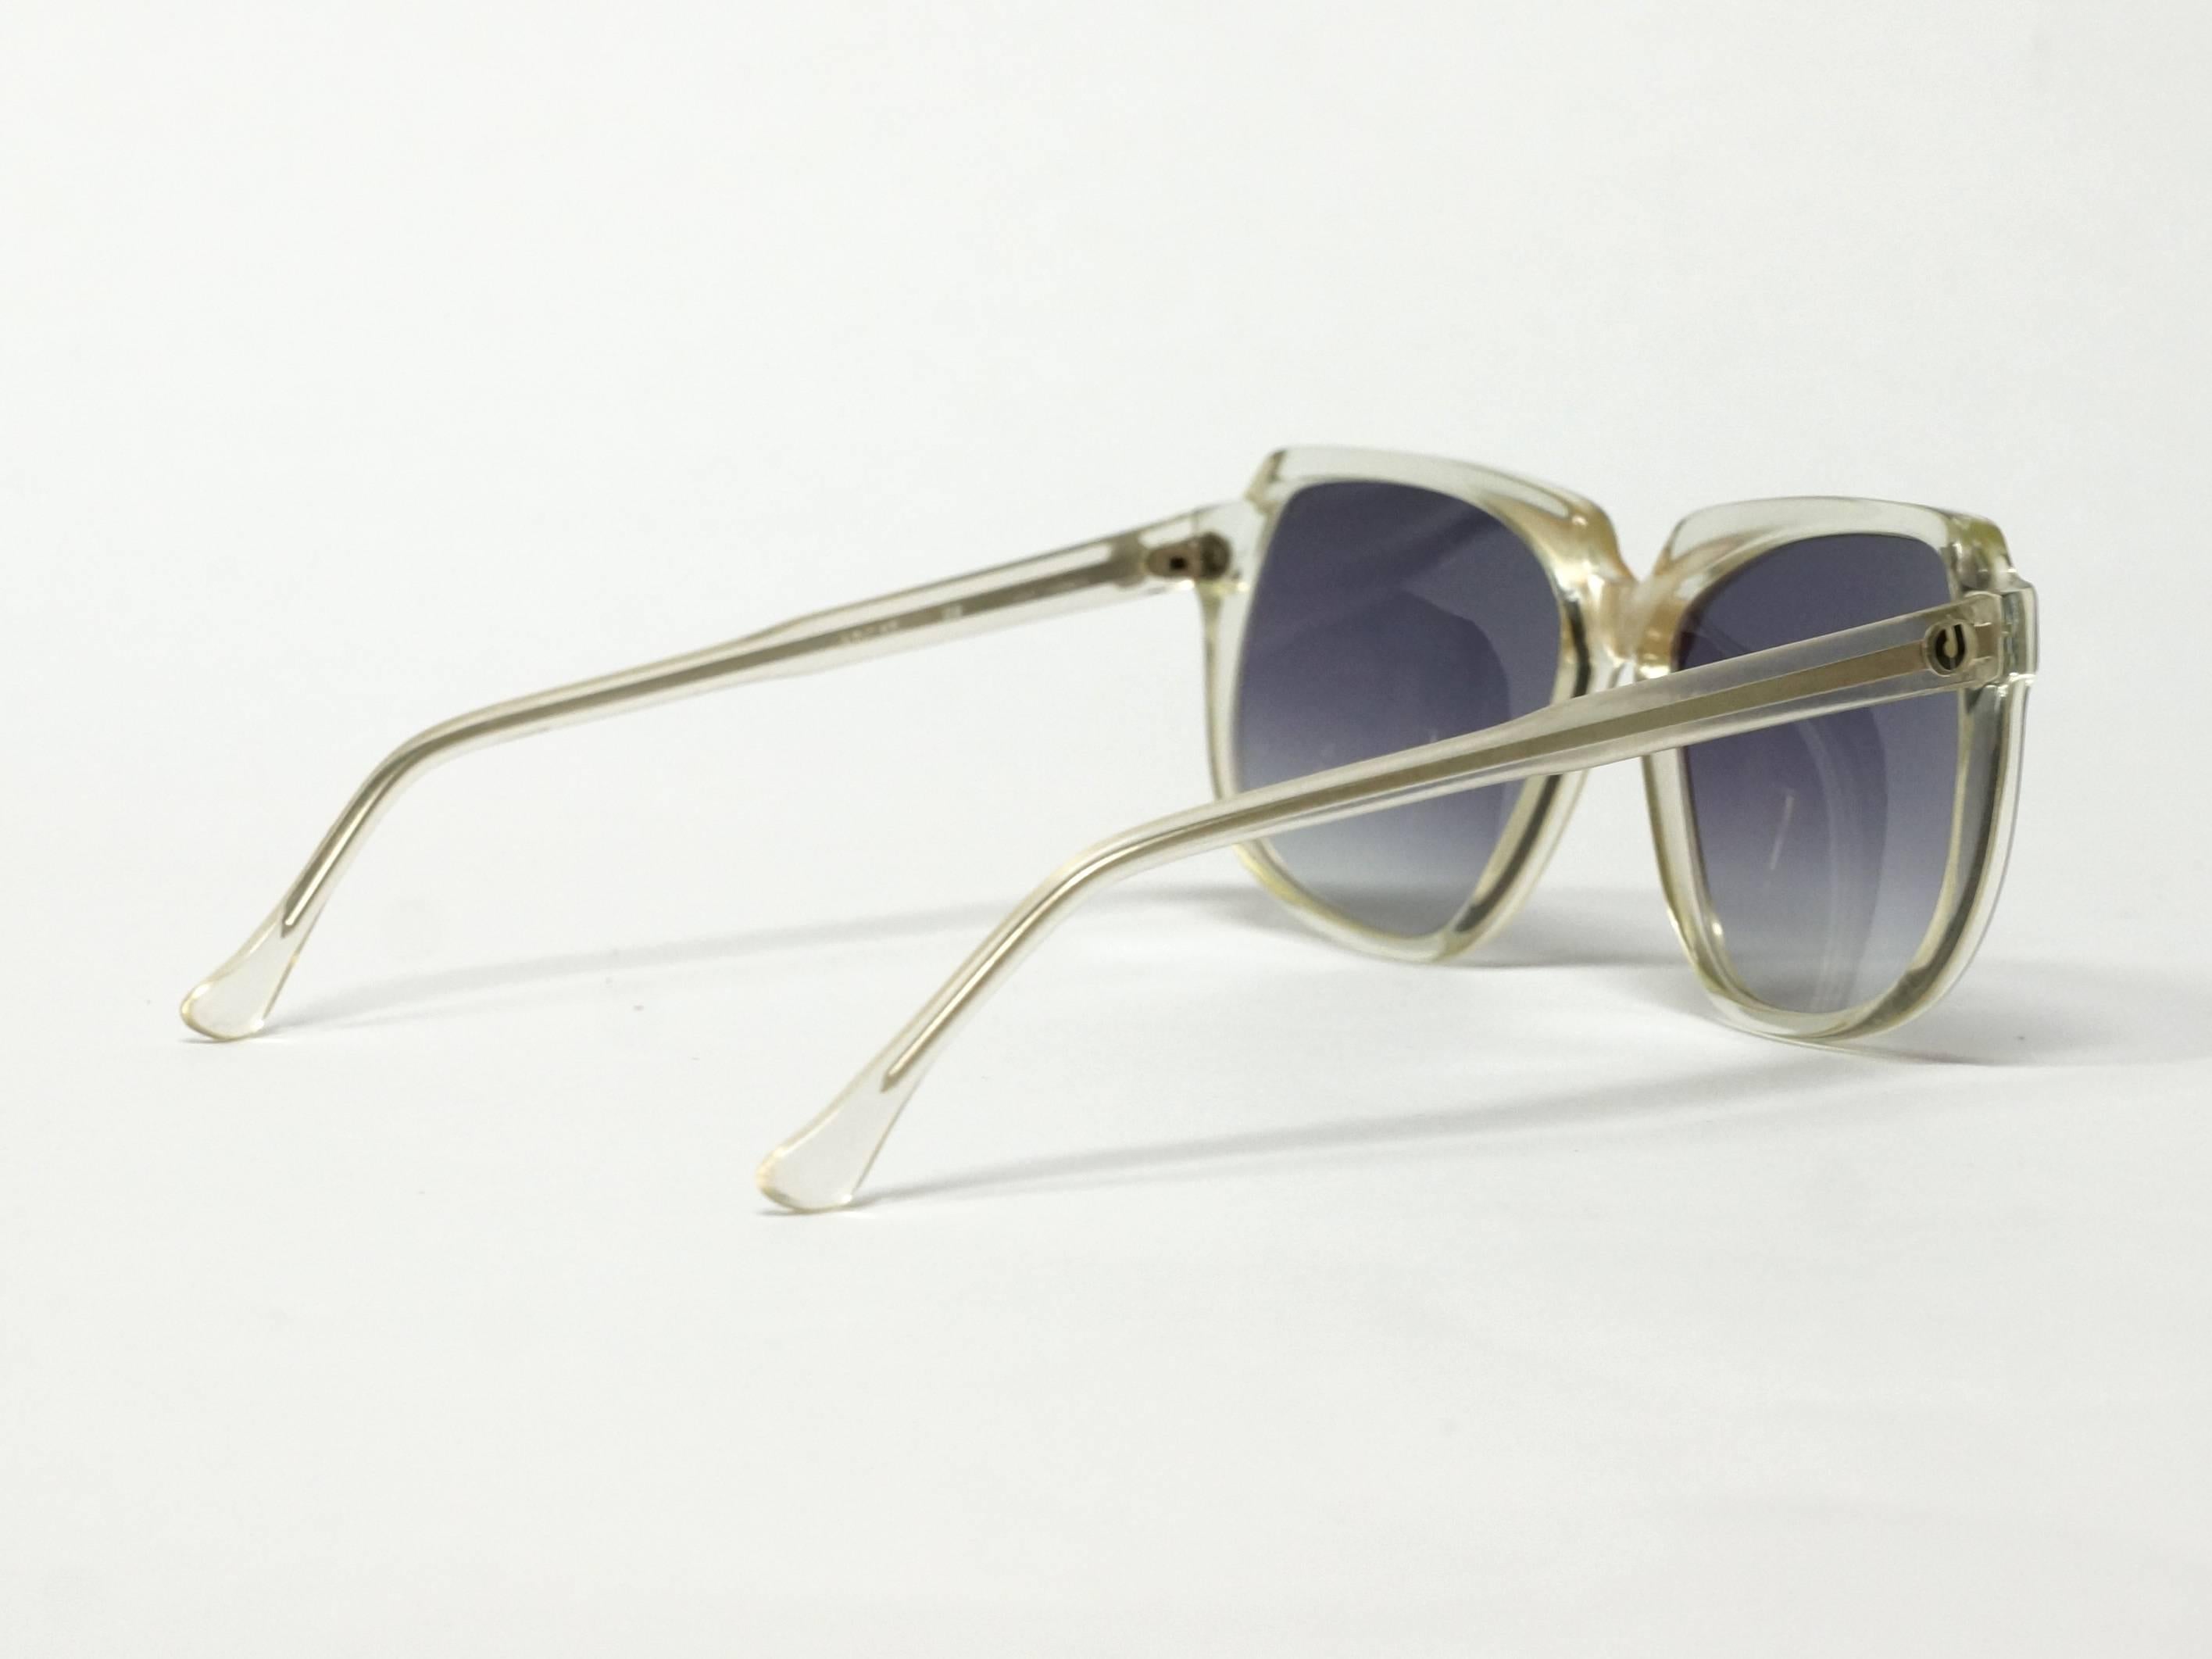 1980s Charles Jourdan Clear Vintage Sunglasses model CJ13 For Sale 3